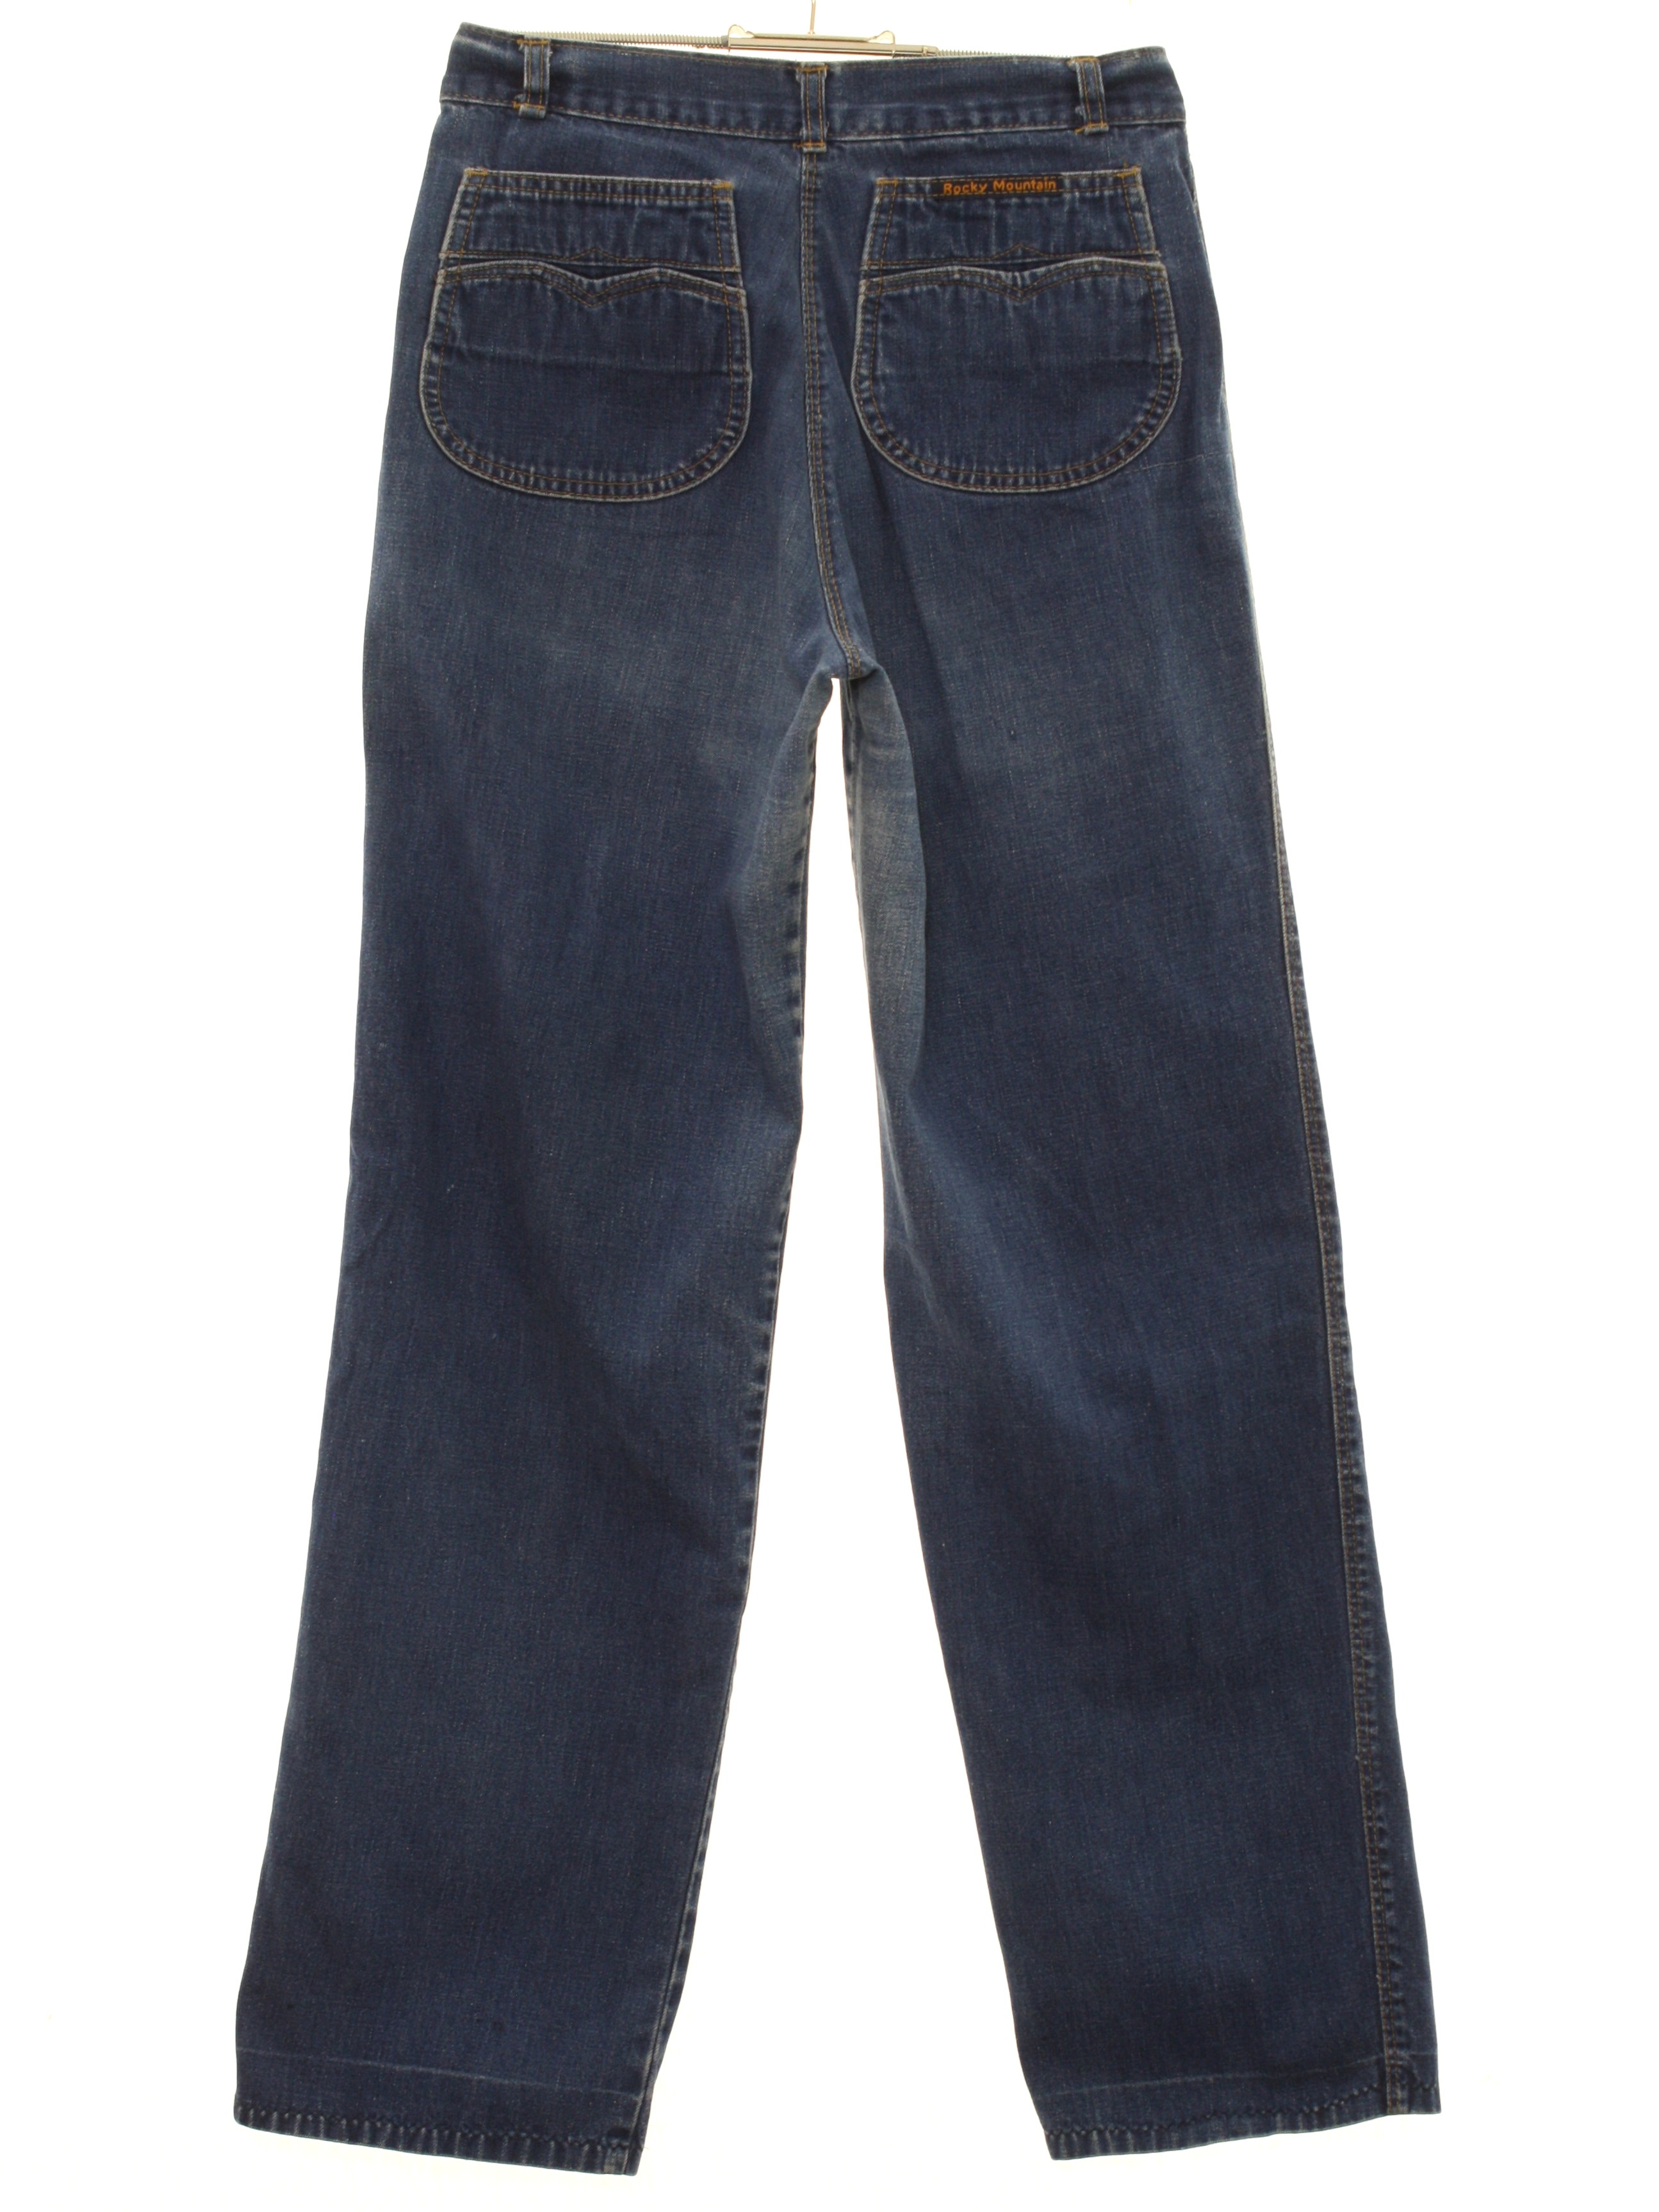 Vintage Rocky Mountain Jeans 1980s Pants: 80s -Rocky Mountain Jeans